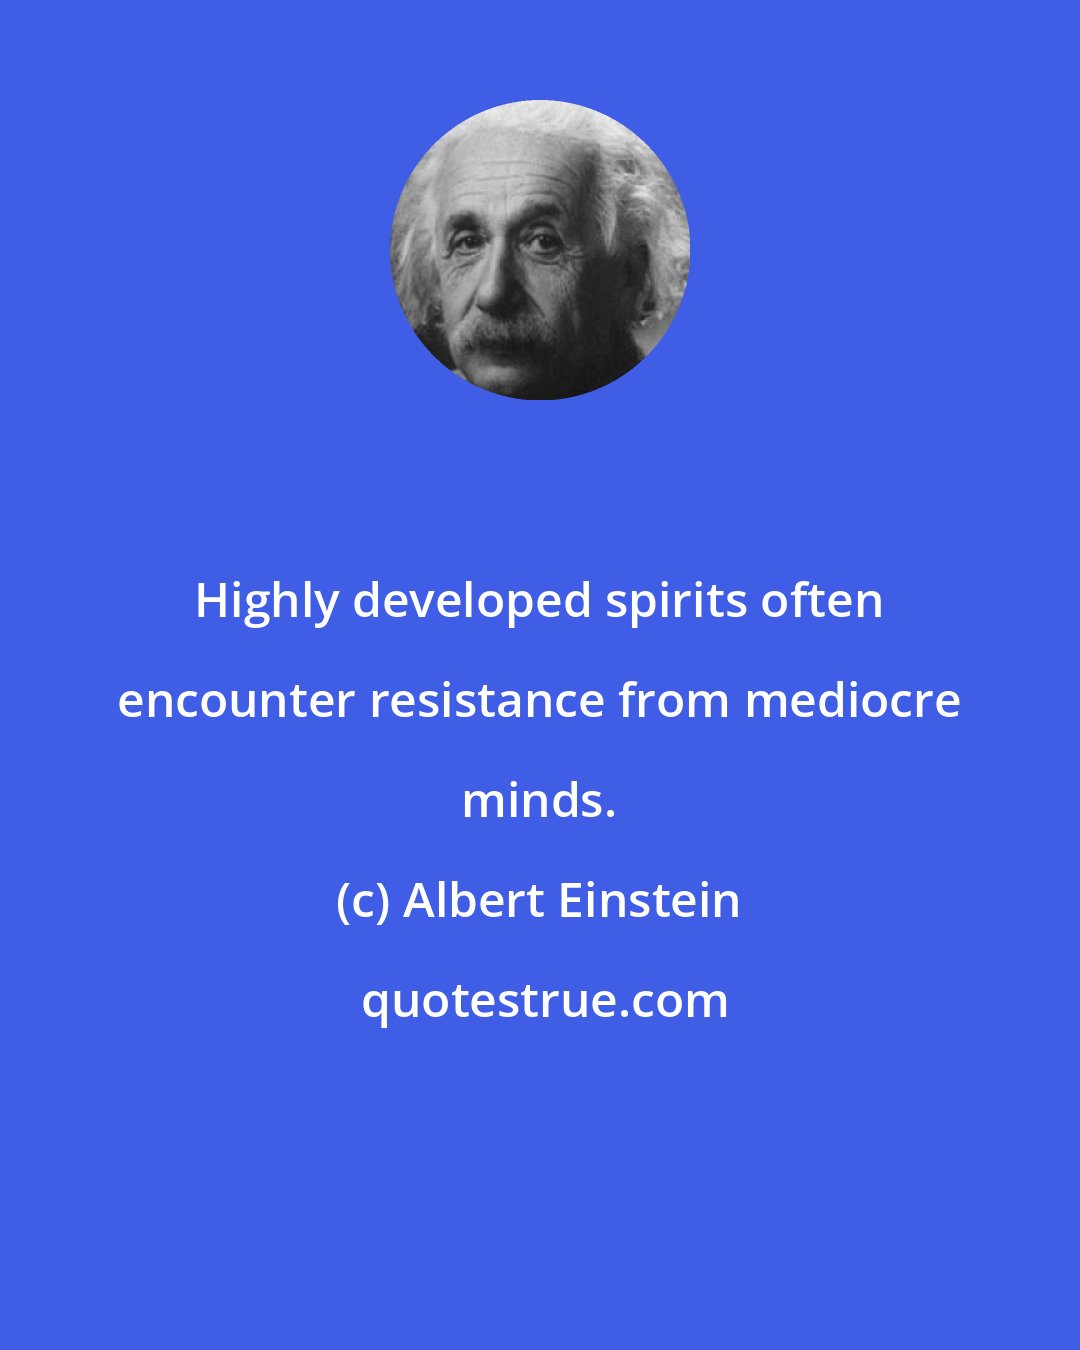 Albert Einstein: Highly developed spirits often encounter resistance from mediocre minds.